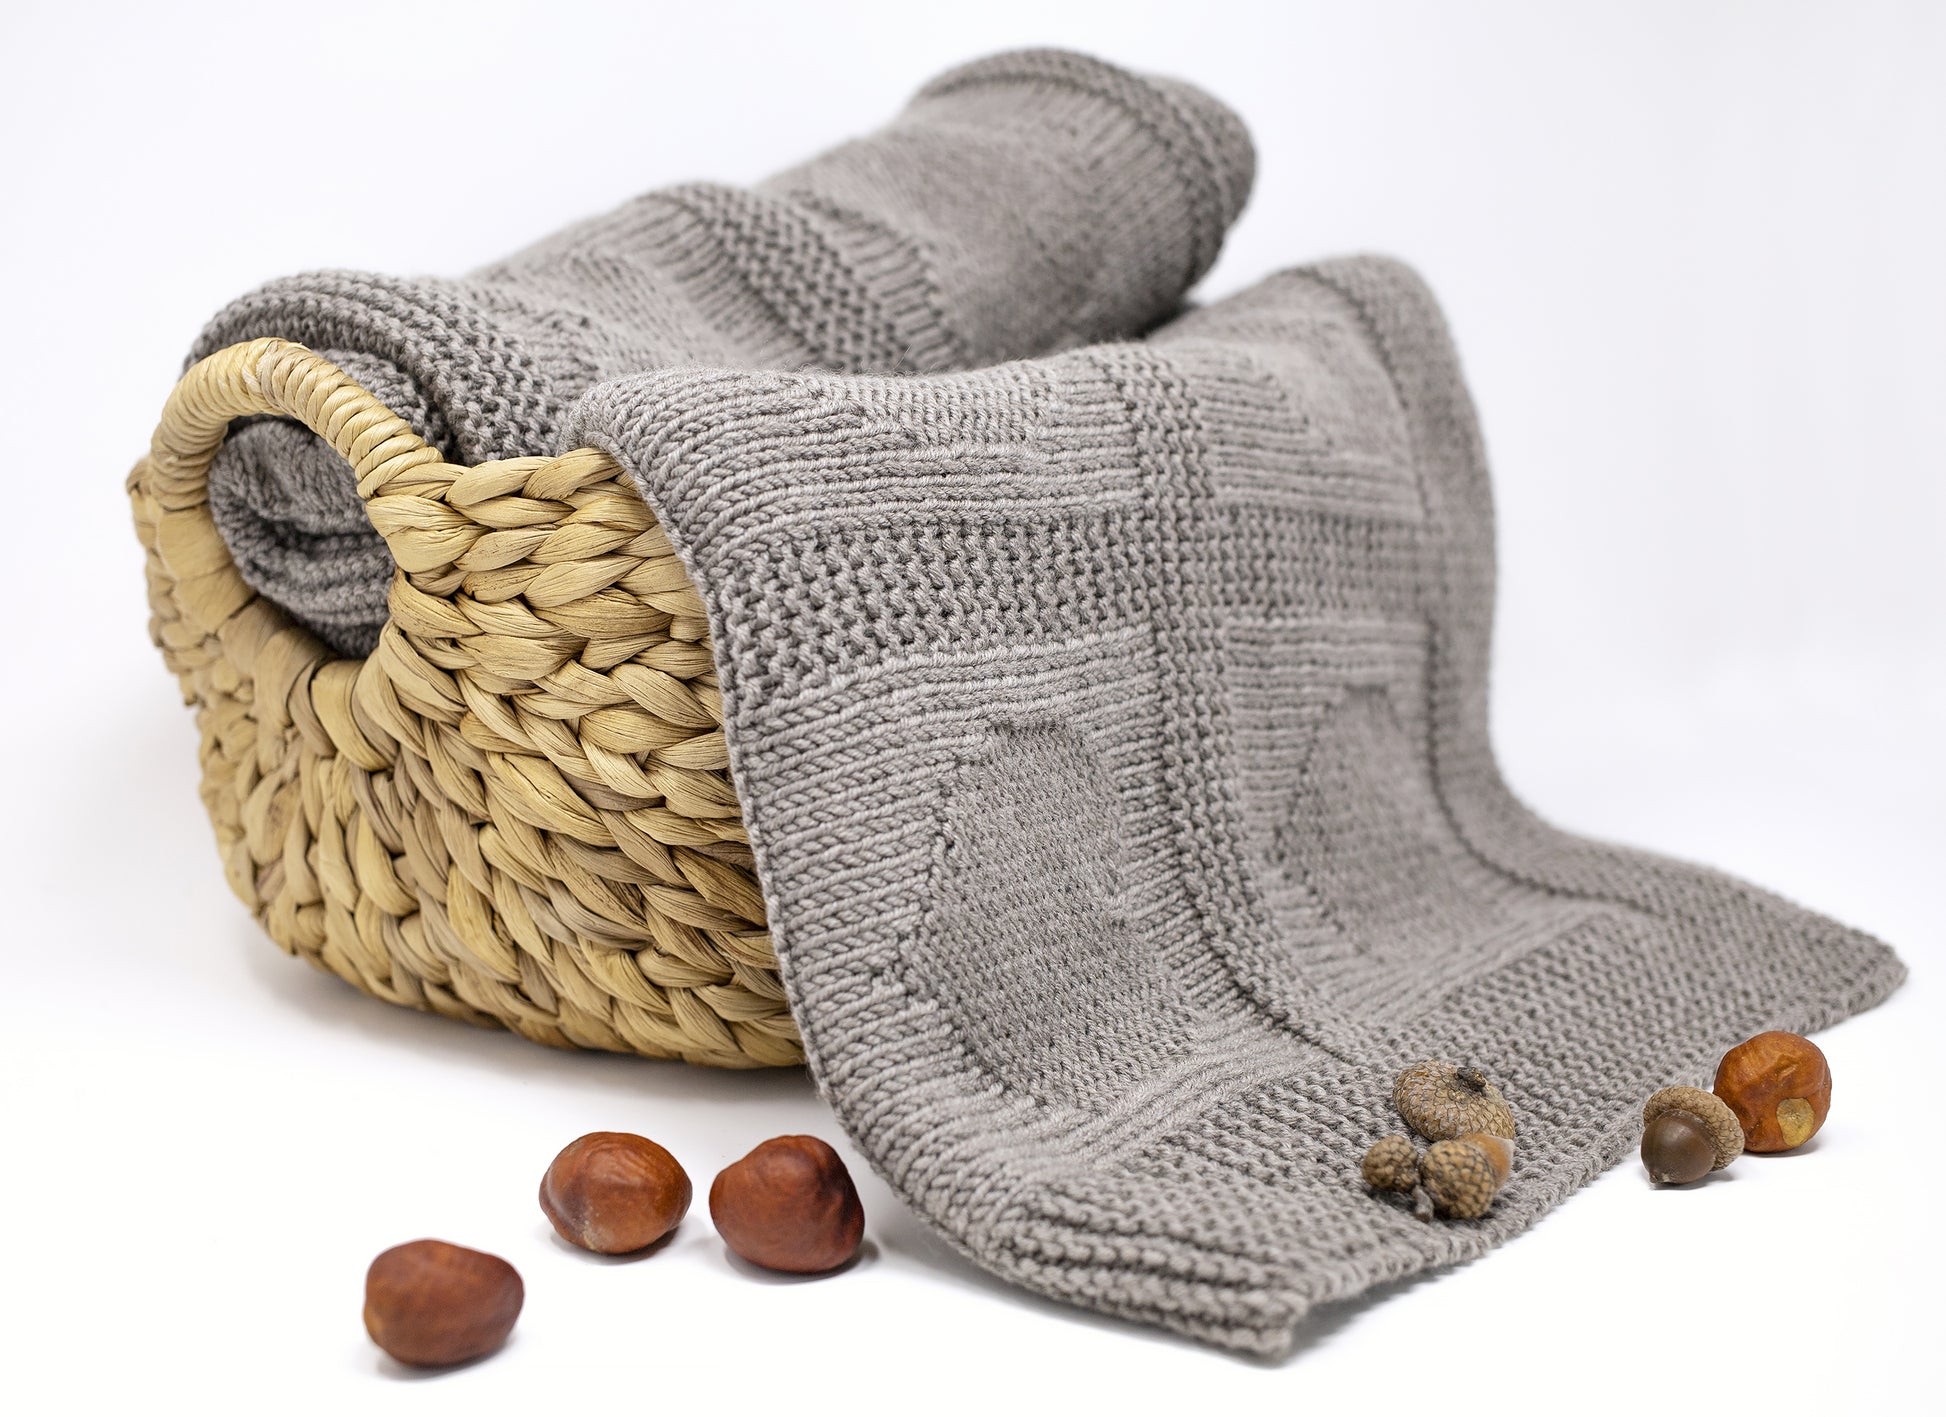 beige superwash merino wool yarn hand-knitted baby blanket in Hearts knitting pattern in a basket